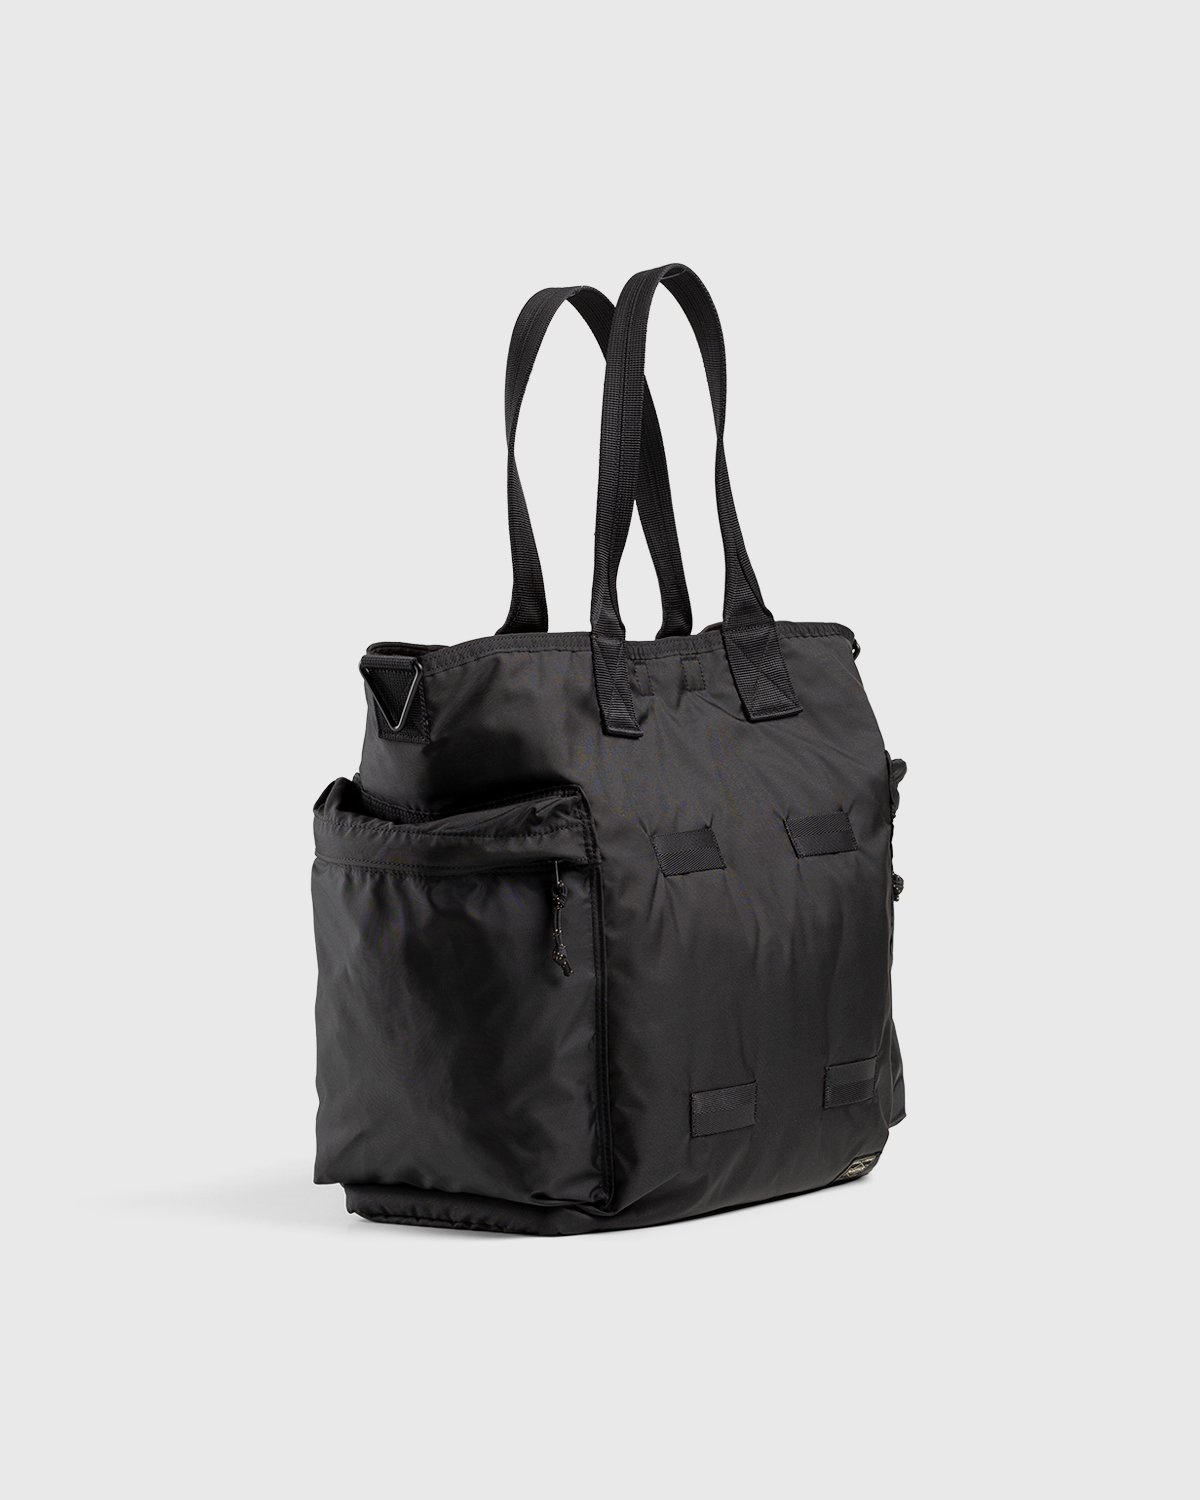 Porter-Yoshida & Co. - 2-Way Tote Bag Black - Accessories - Black - Image 3